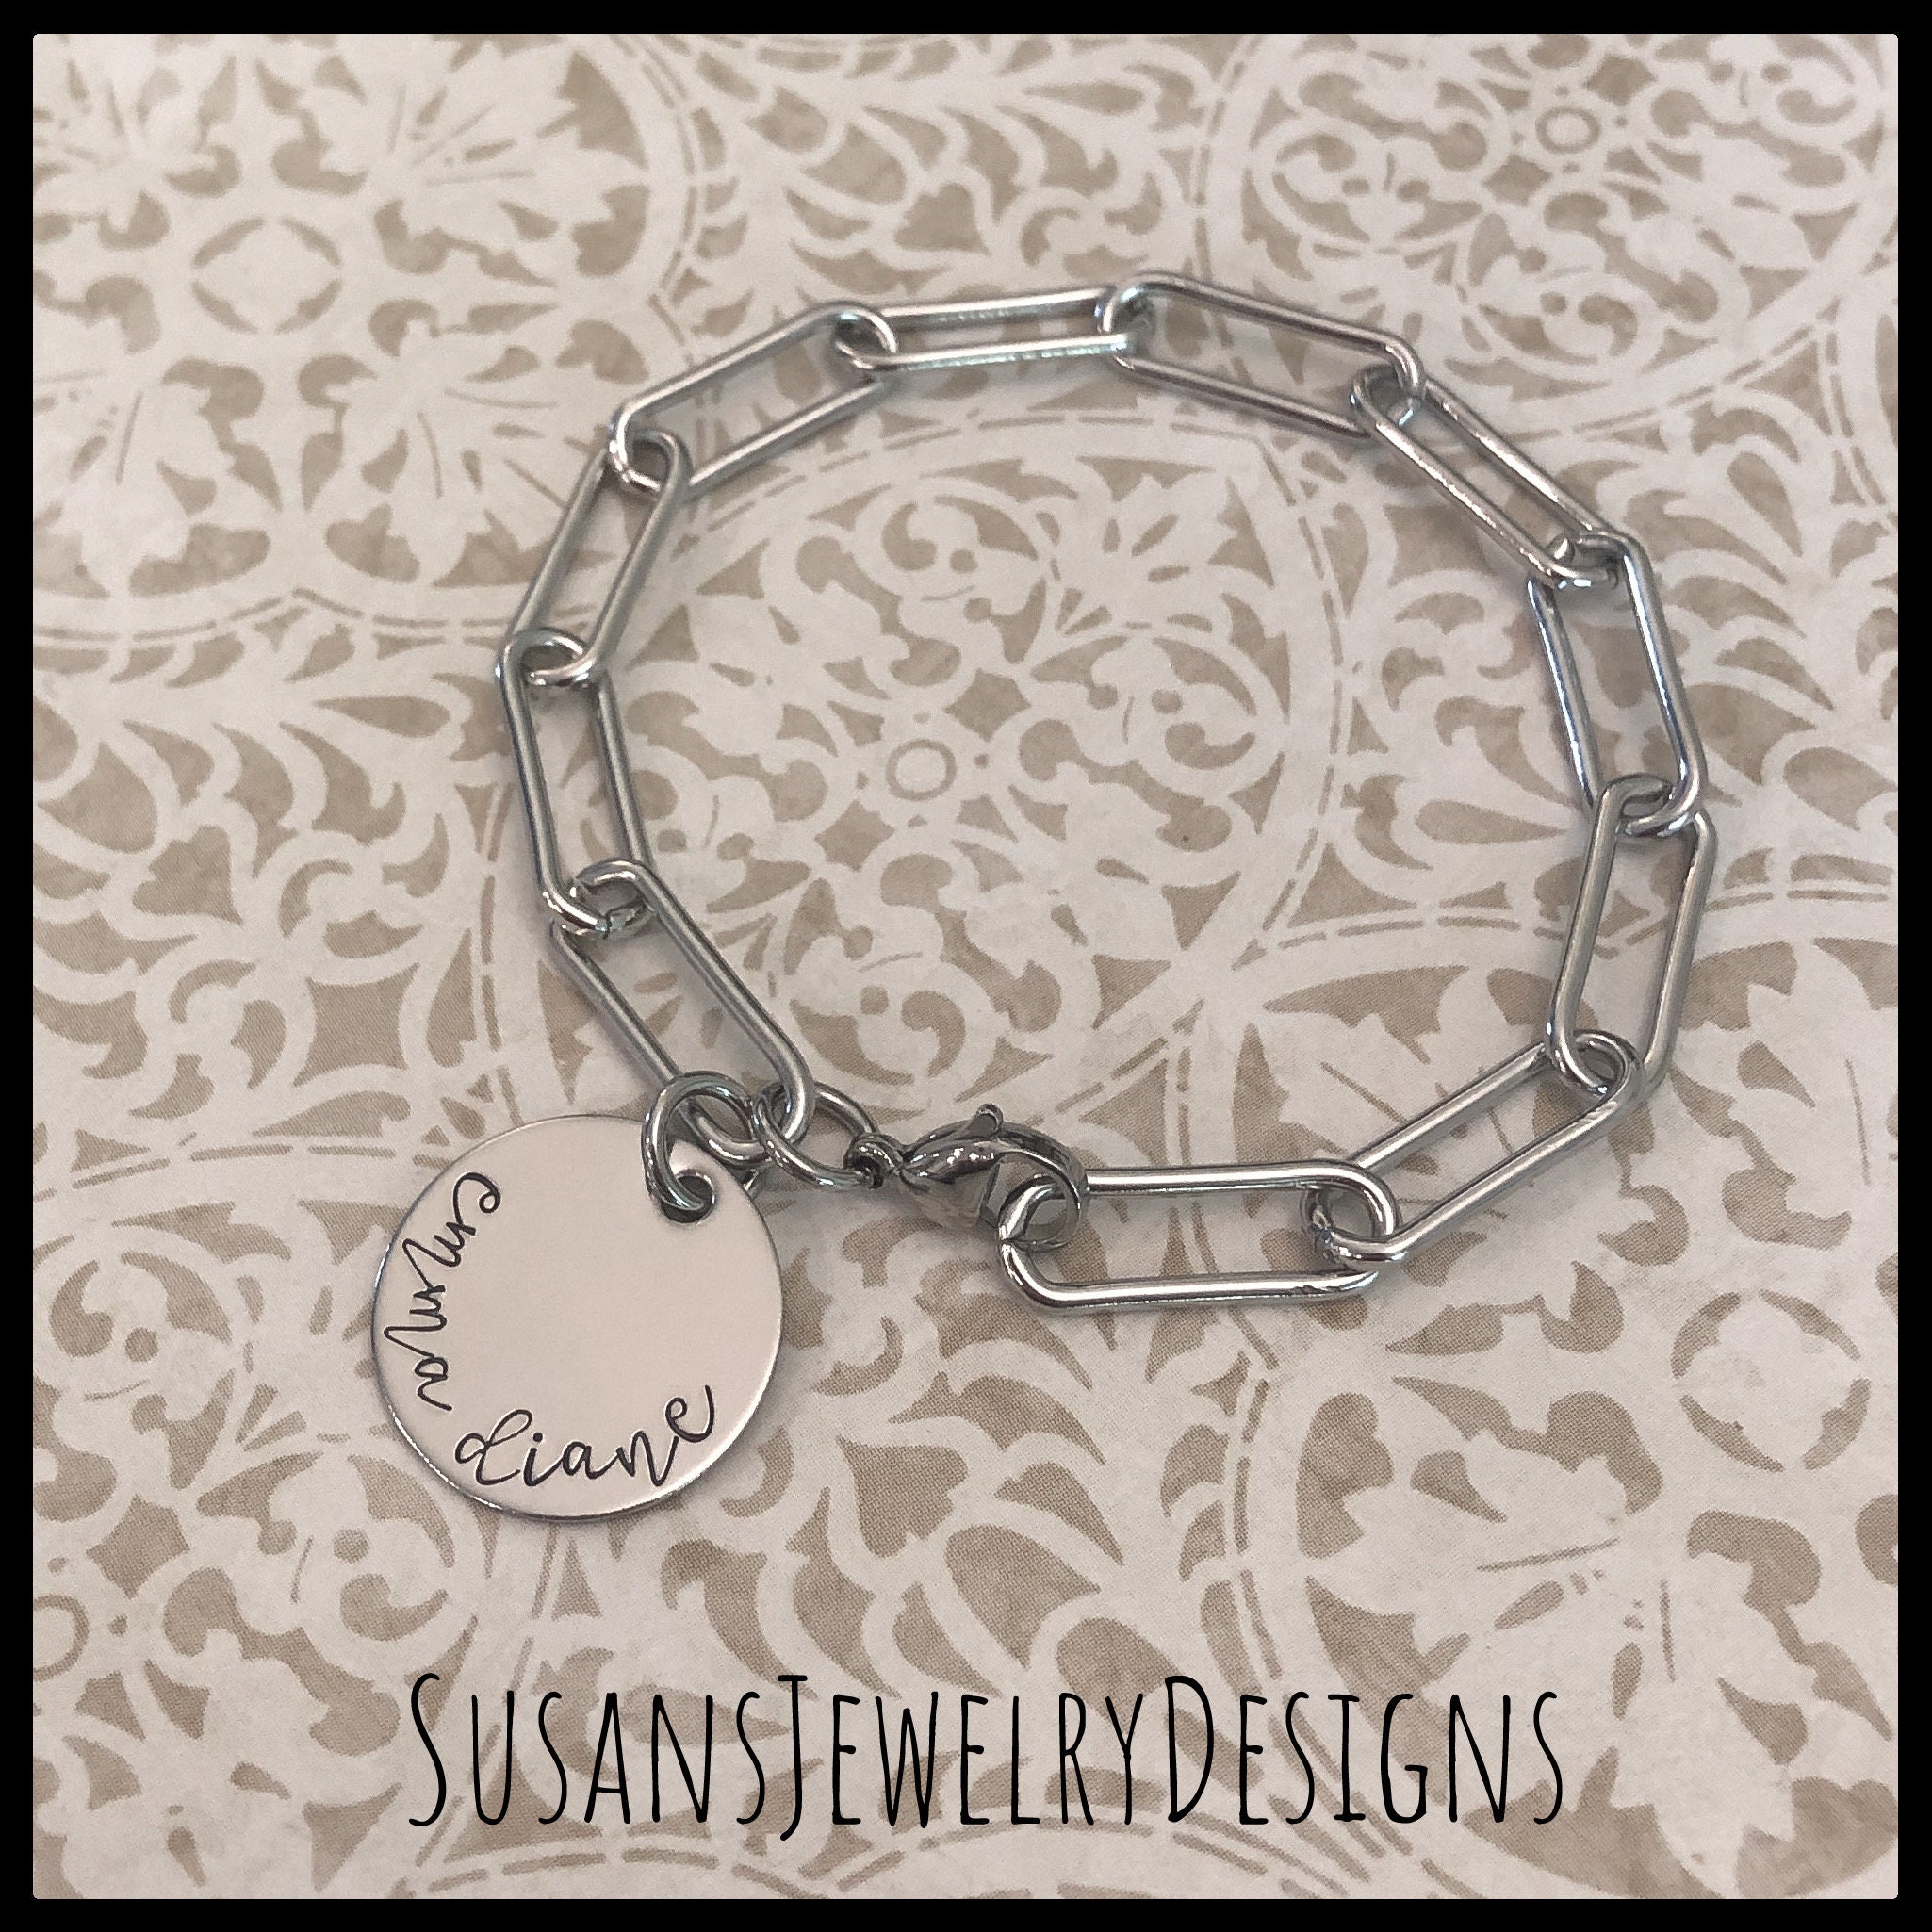 HEIDIJHALE Engraved Chain-Link Bracelet